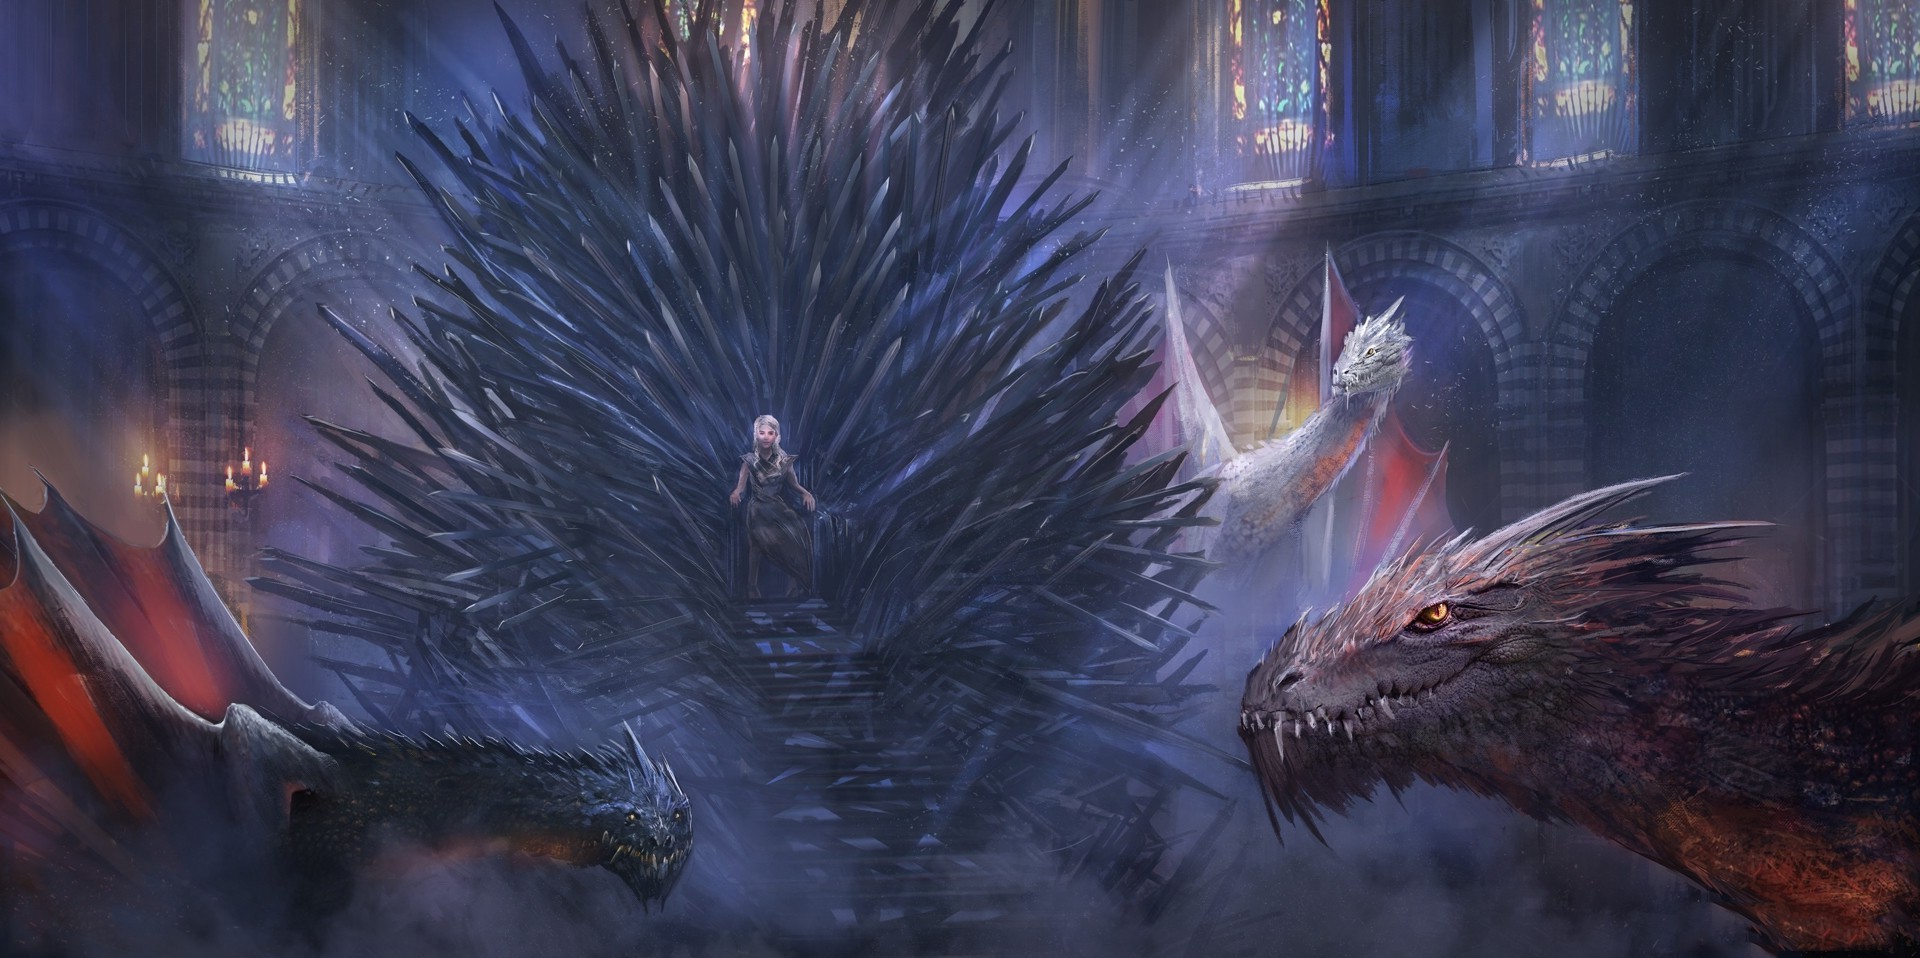 fantasy Art, Game Of Thrones, Daenerys Targaryen, Iron Throne Wallpaper